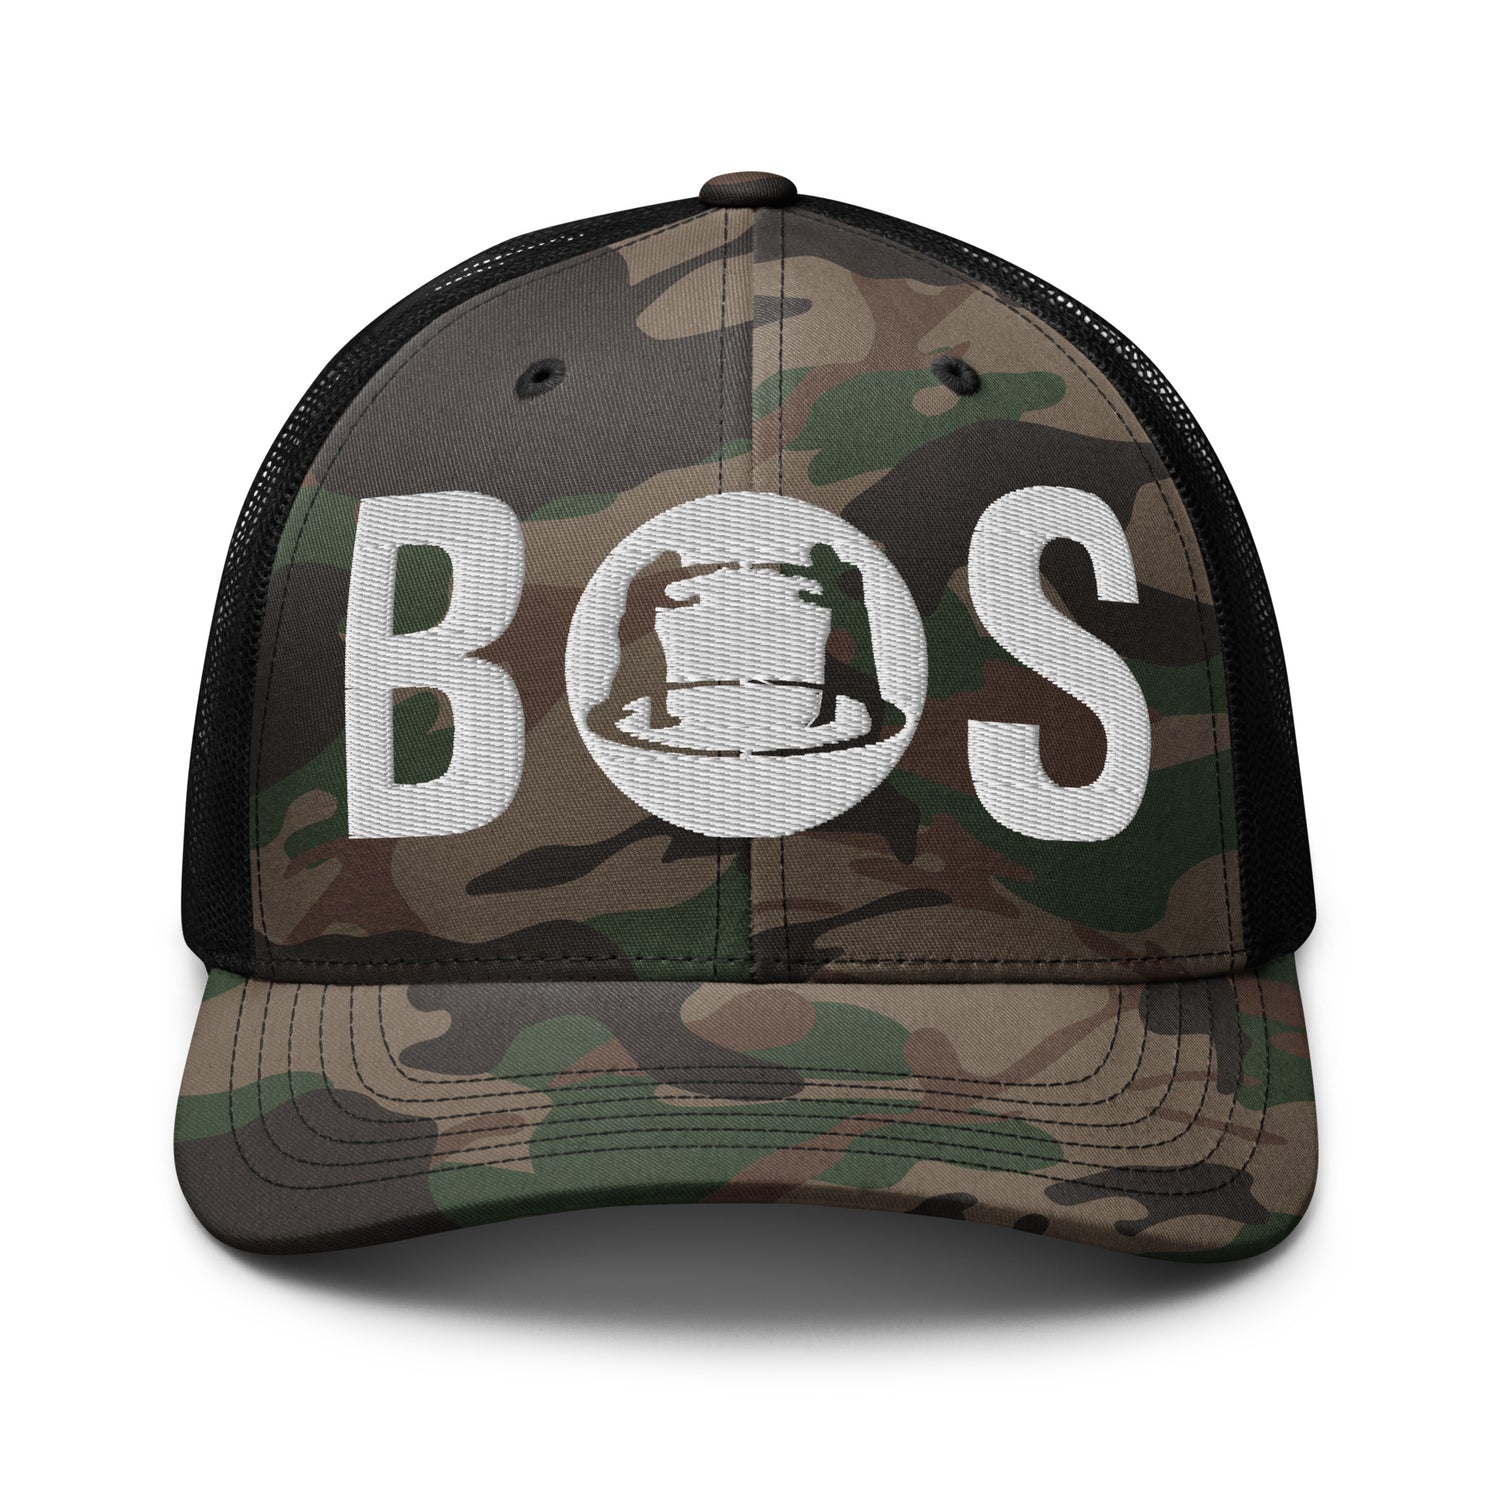 Camouflage trucker hat BOS